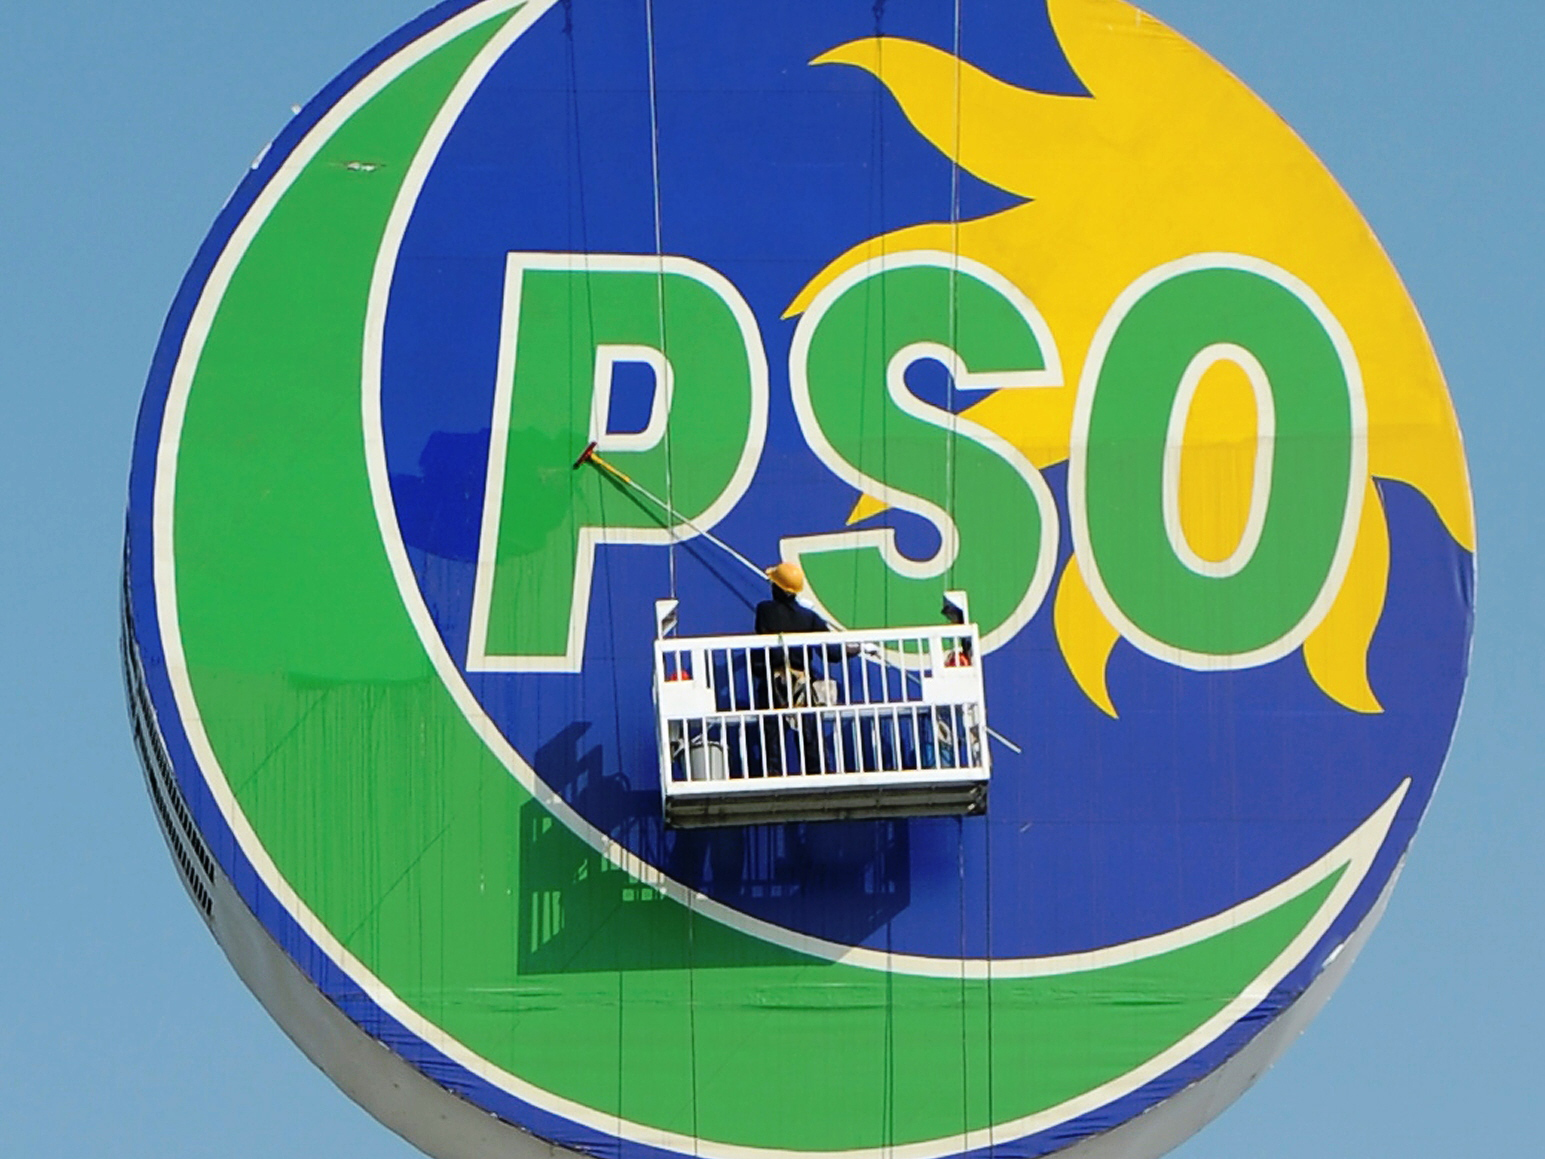 Call for PSO pumps’ audit after blaze